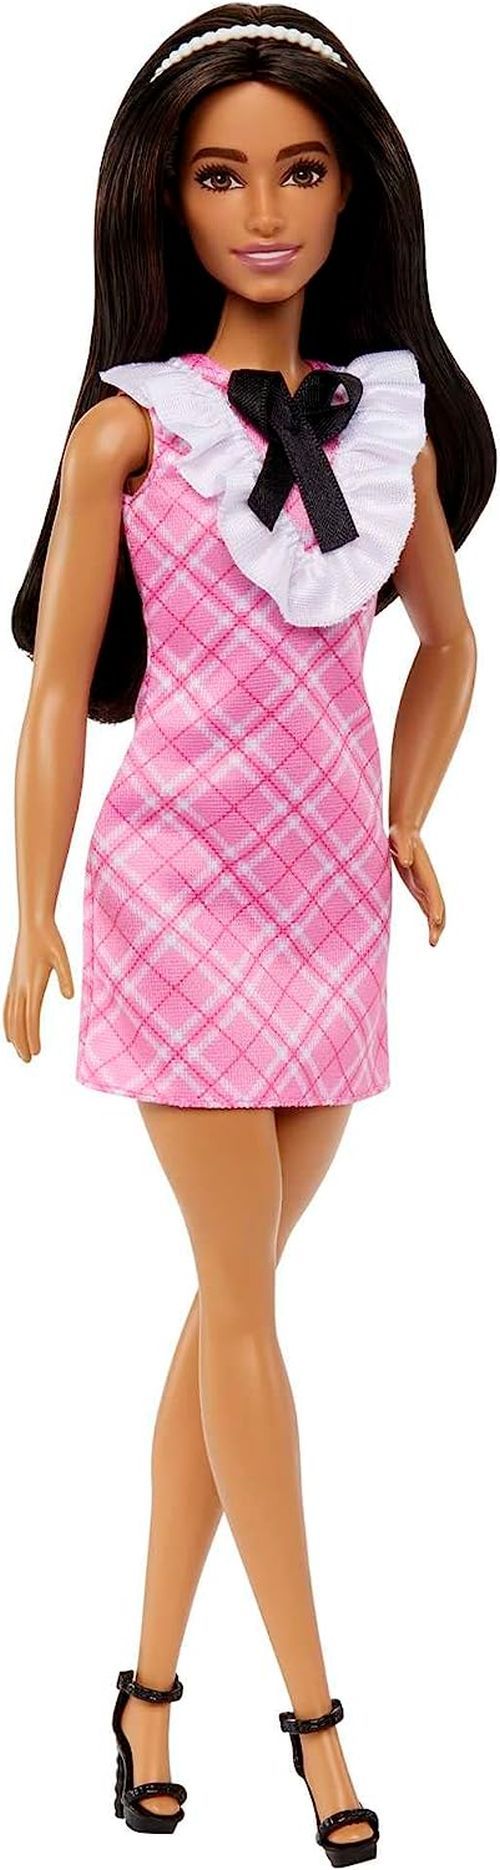 MATTEL Barbie In A Pink Plaid Dress - BARBIE DOLLS